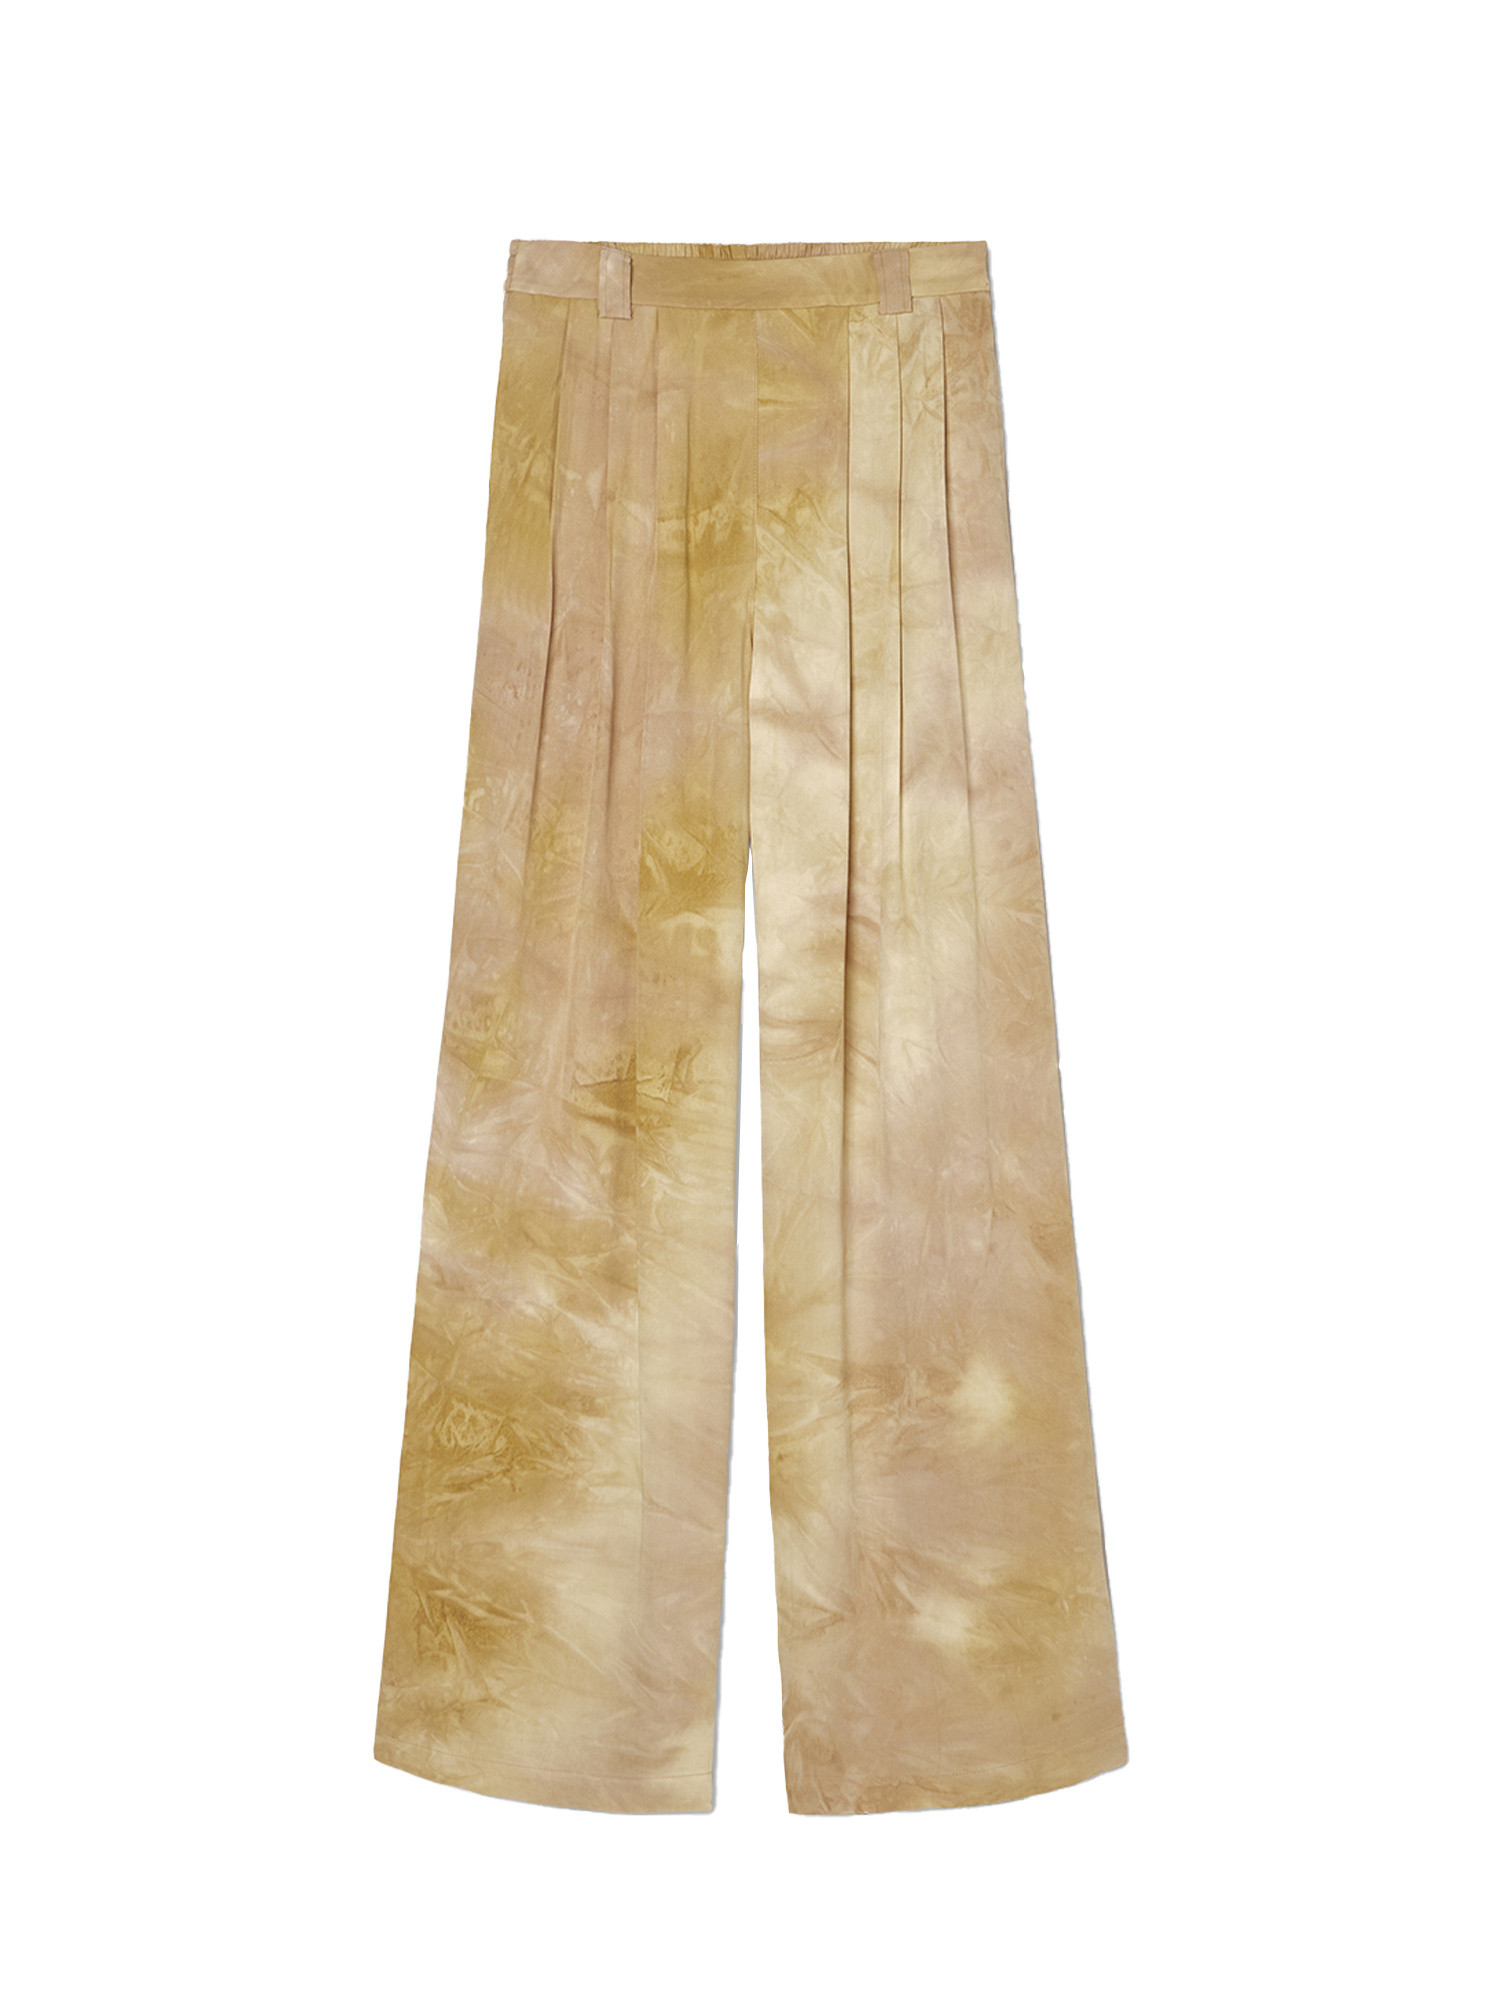 Momonì - Lanzarote pants in cotton poplin, Multicolor, large image number 0